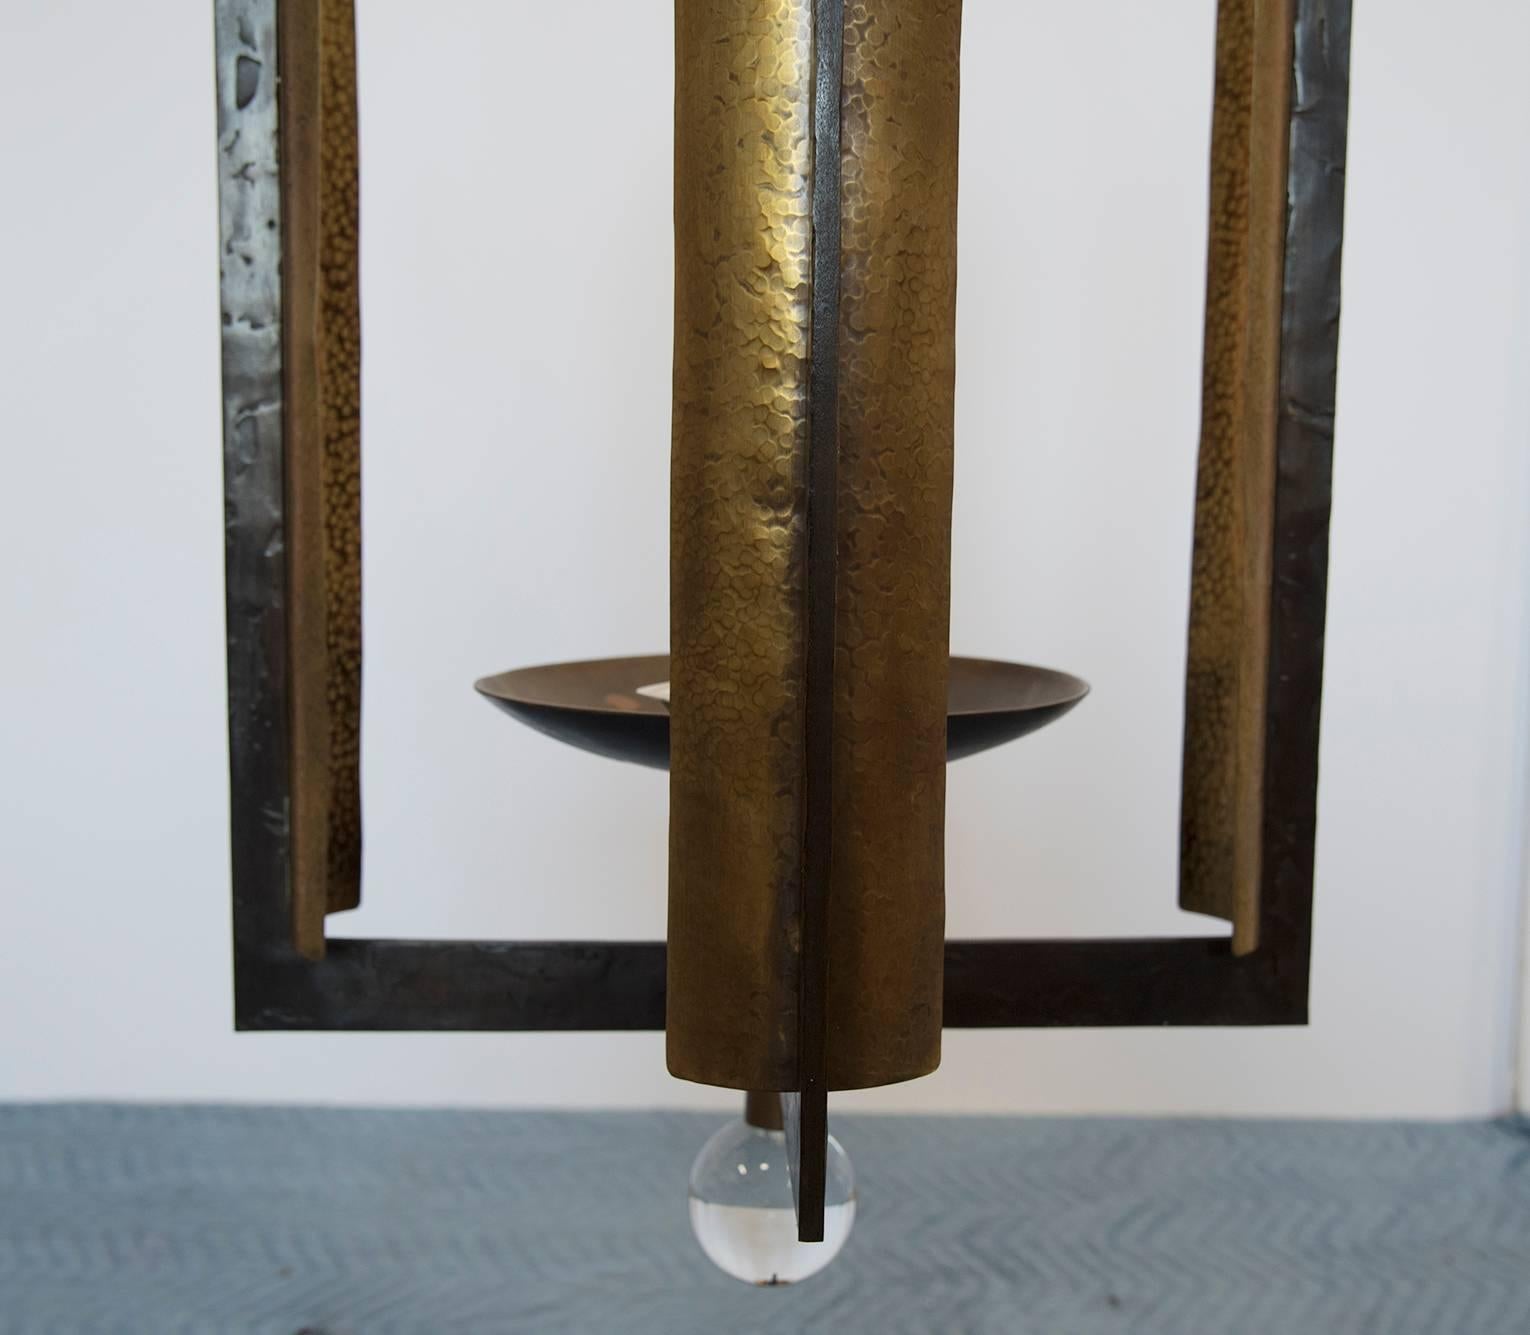 A contemporary design in bronze for a large-sized hanging lantern b Herve Van Der Straeten, France, circa 2004. Monogrammed HV. The drop measures 65.5